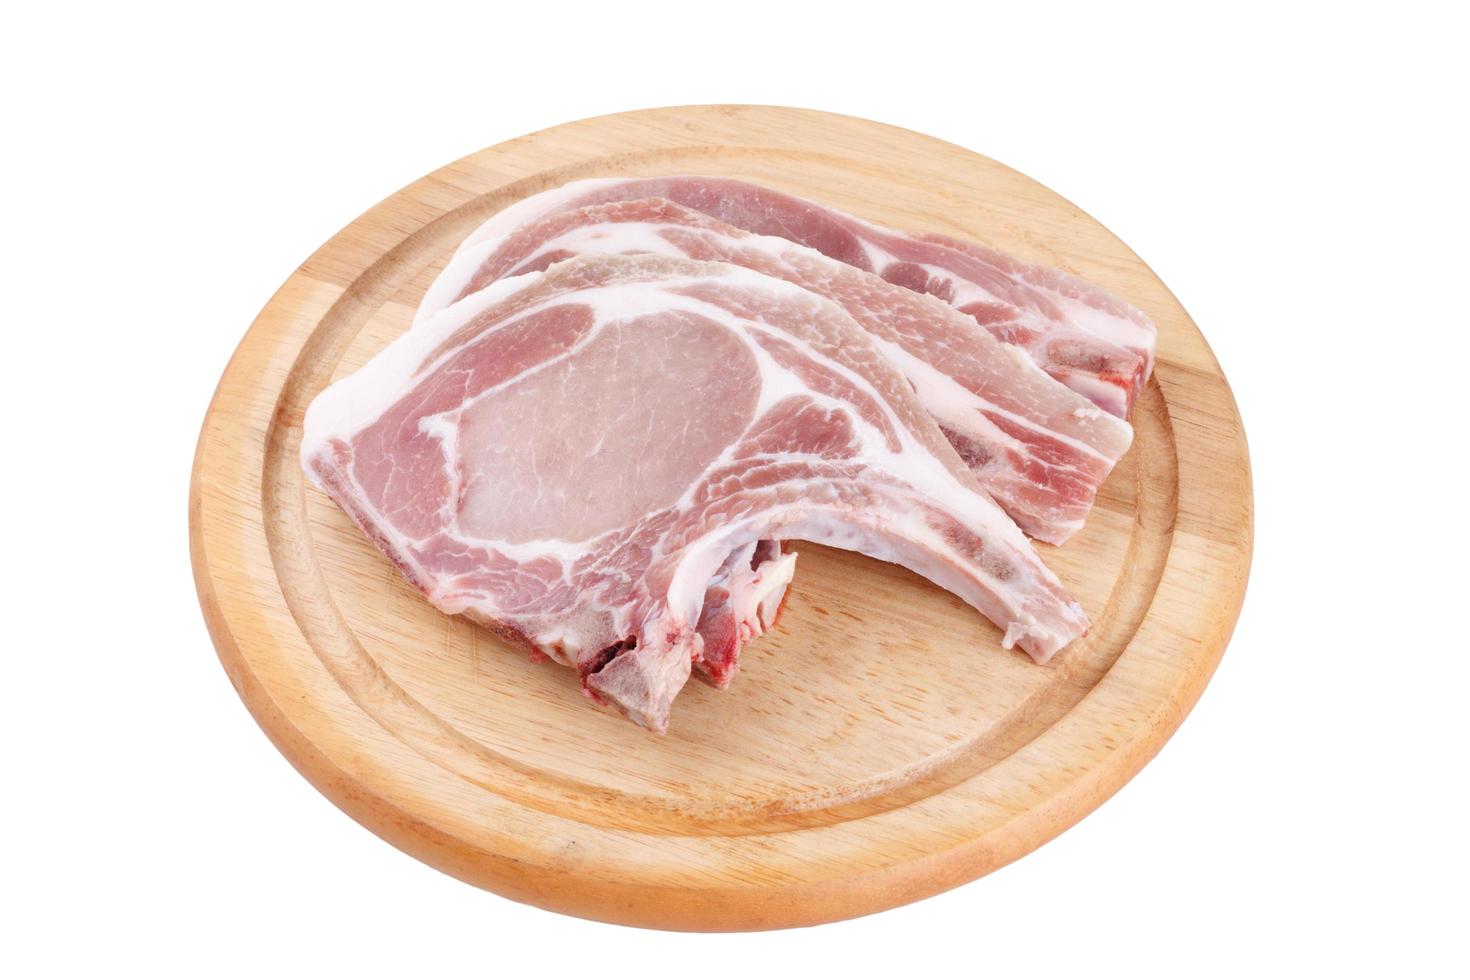 Raw pork chop on wooden broad or cooking pork chop steak photo